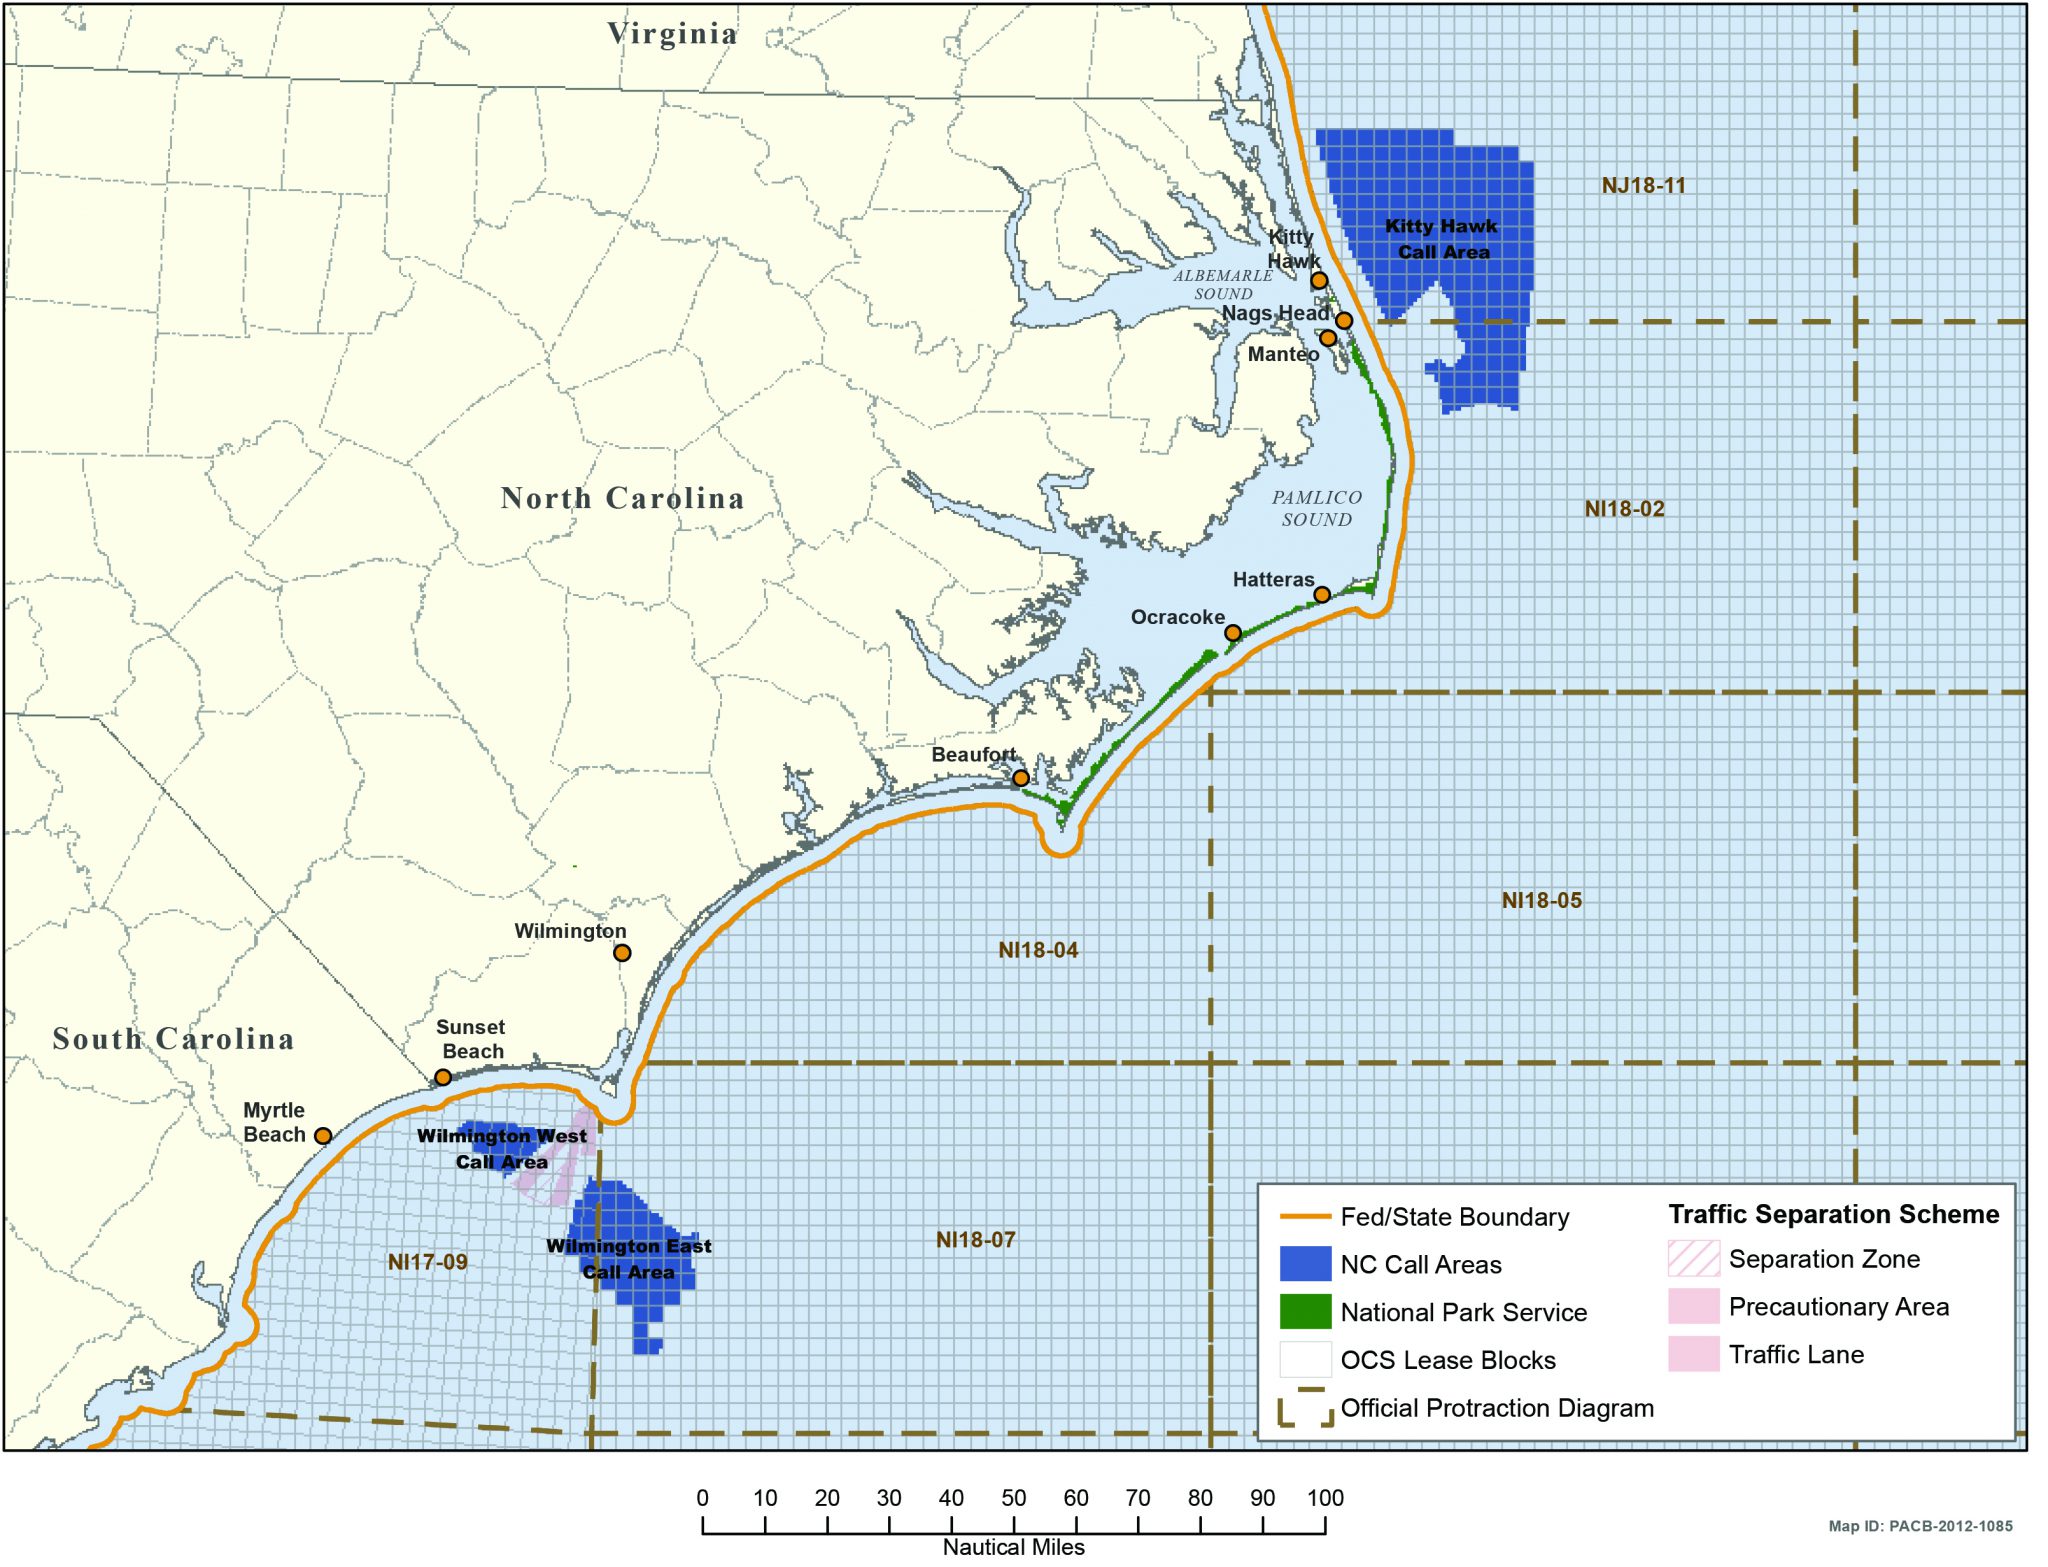 Survey Finds Coastal Carolina Residents Support Offshore Wind Energy